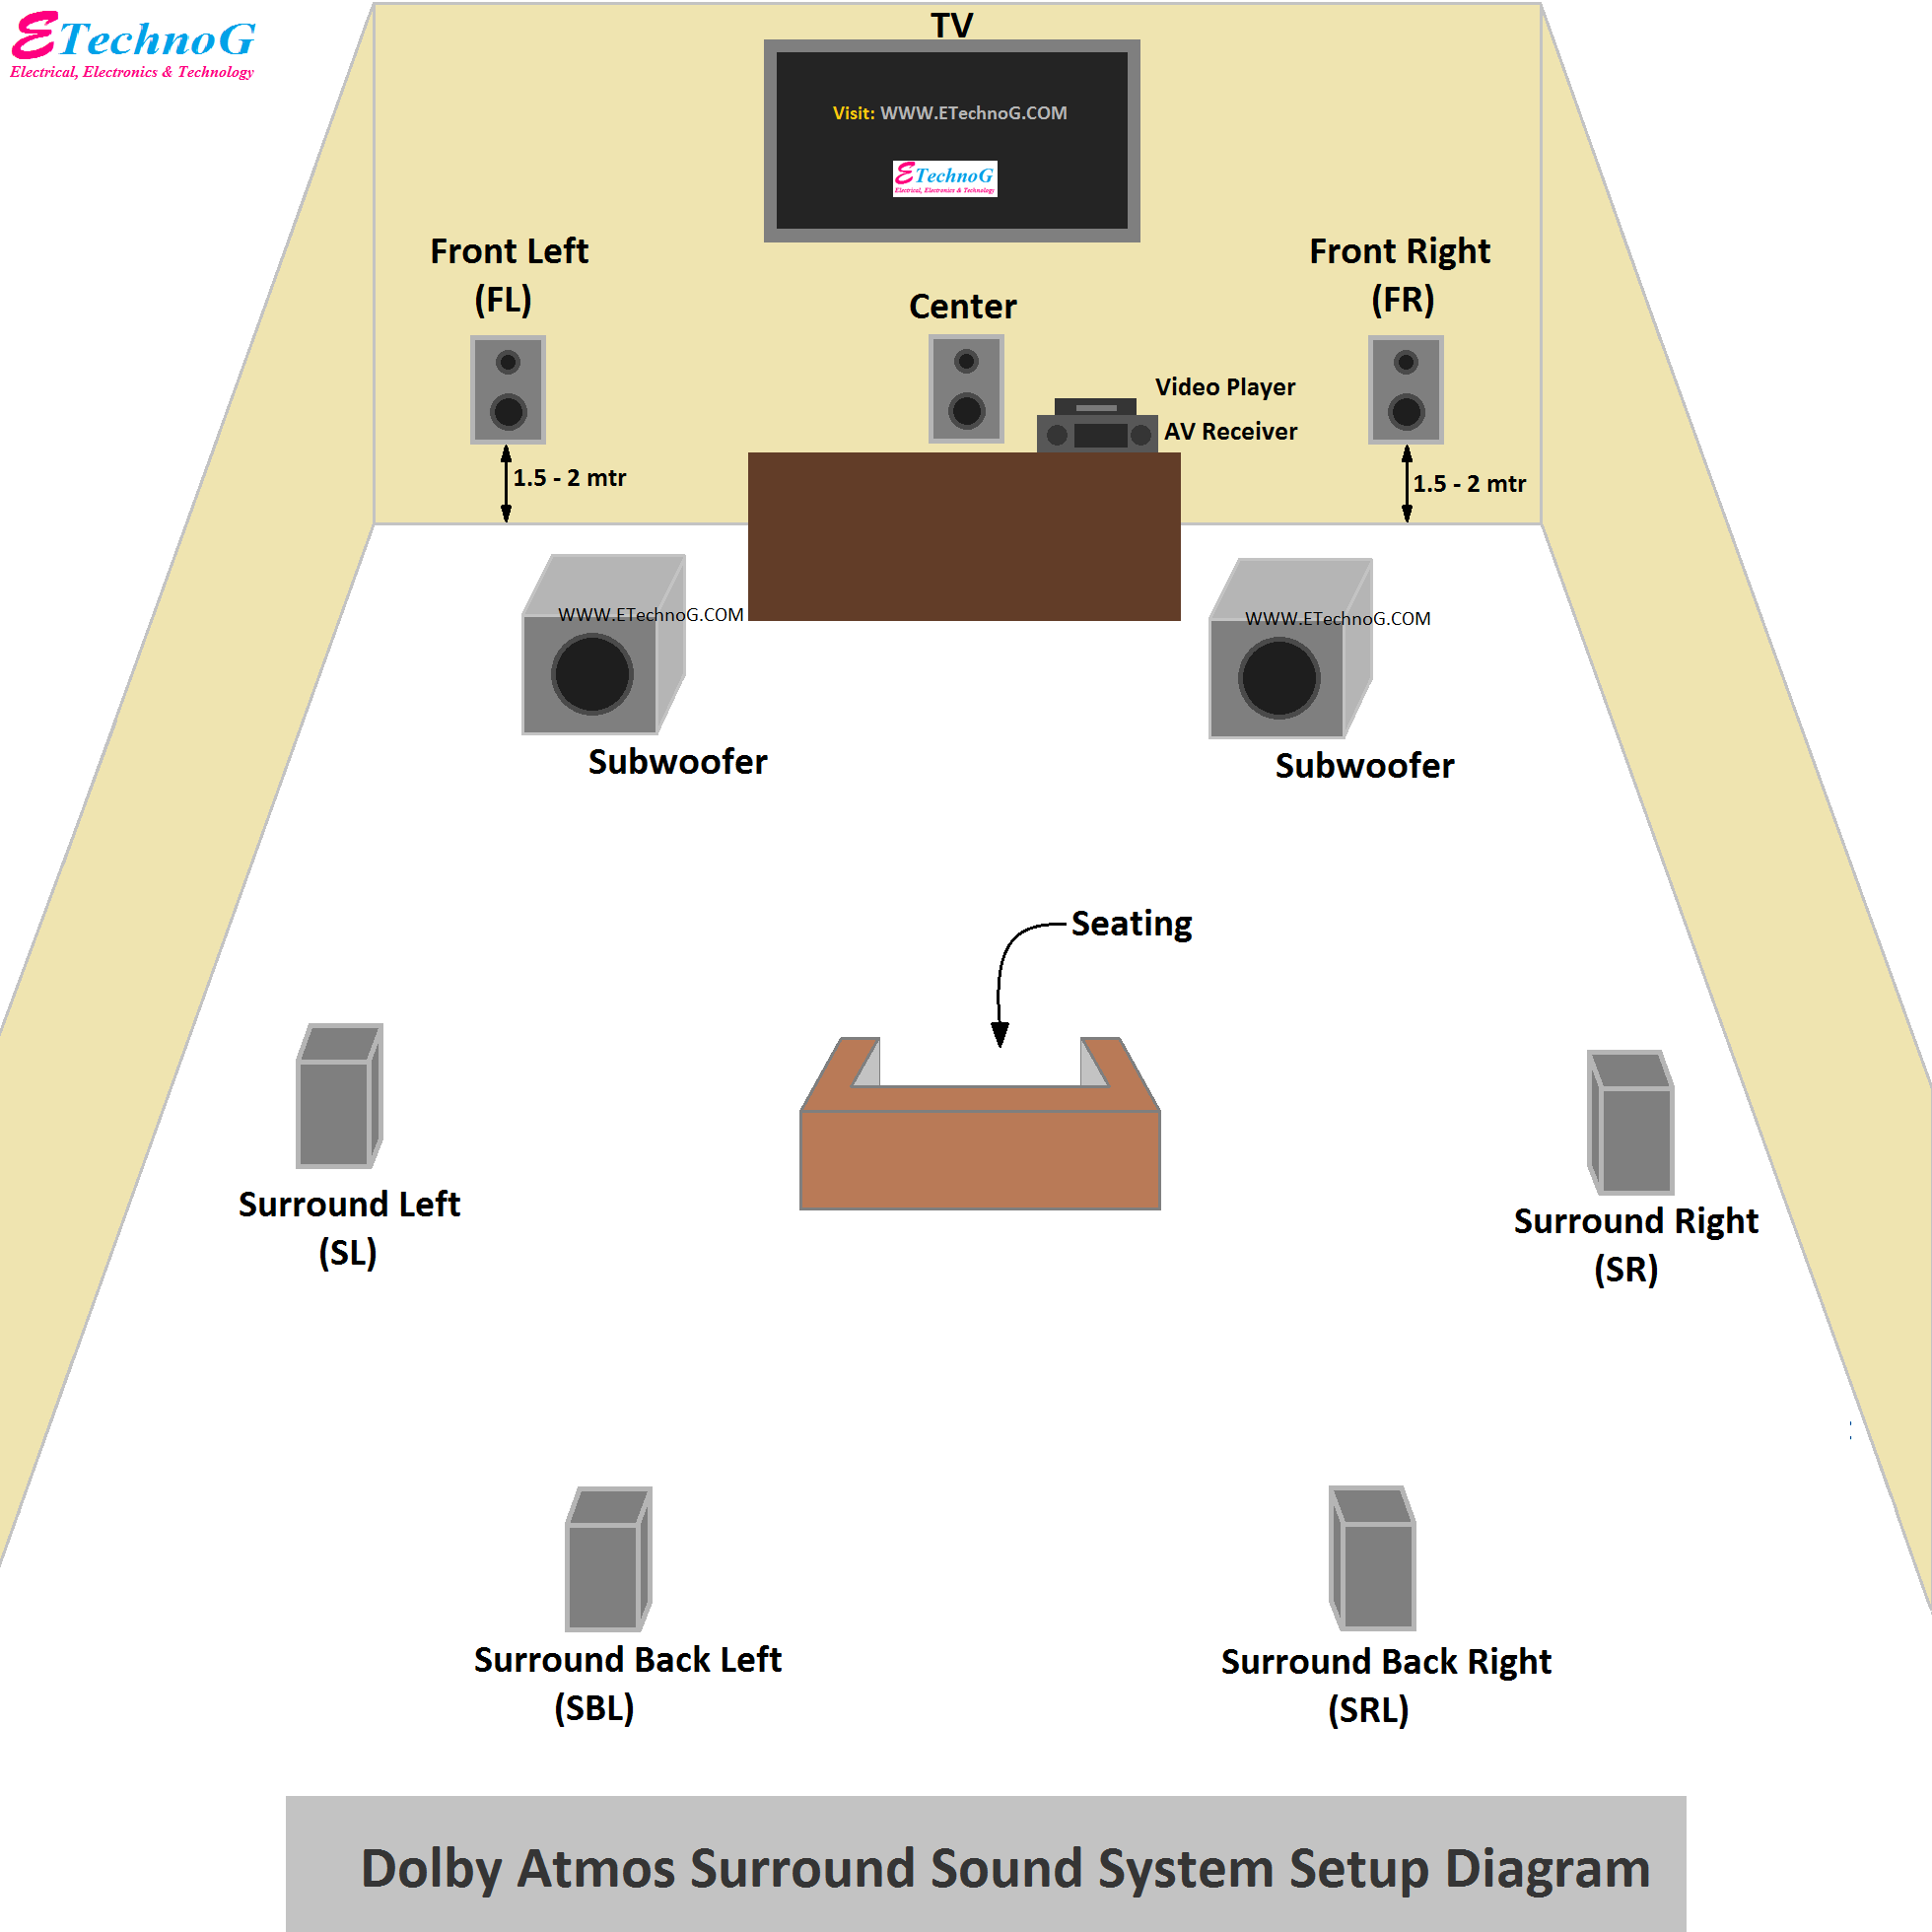 Dolby Atmos Surround Sound System Setup Diagram, Speaker placement, installation